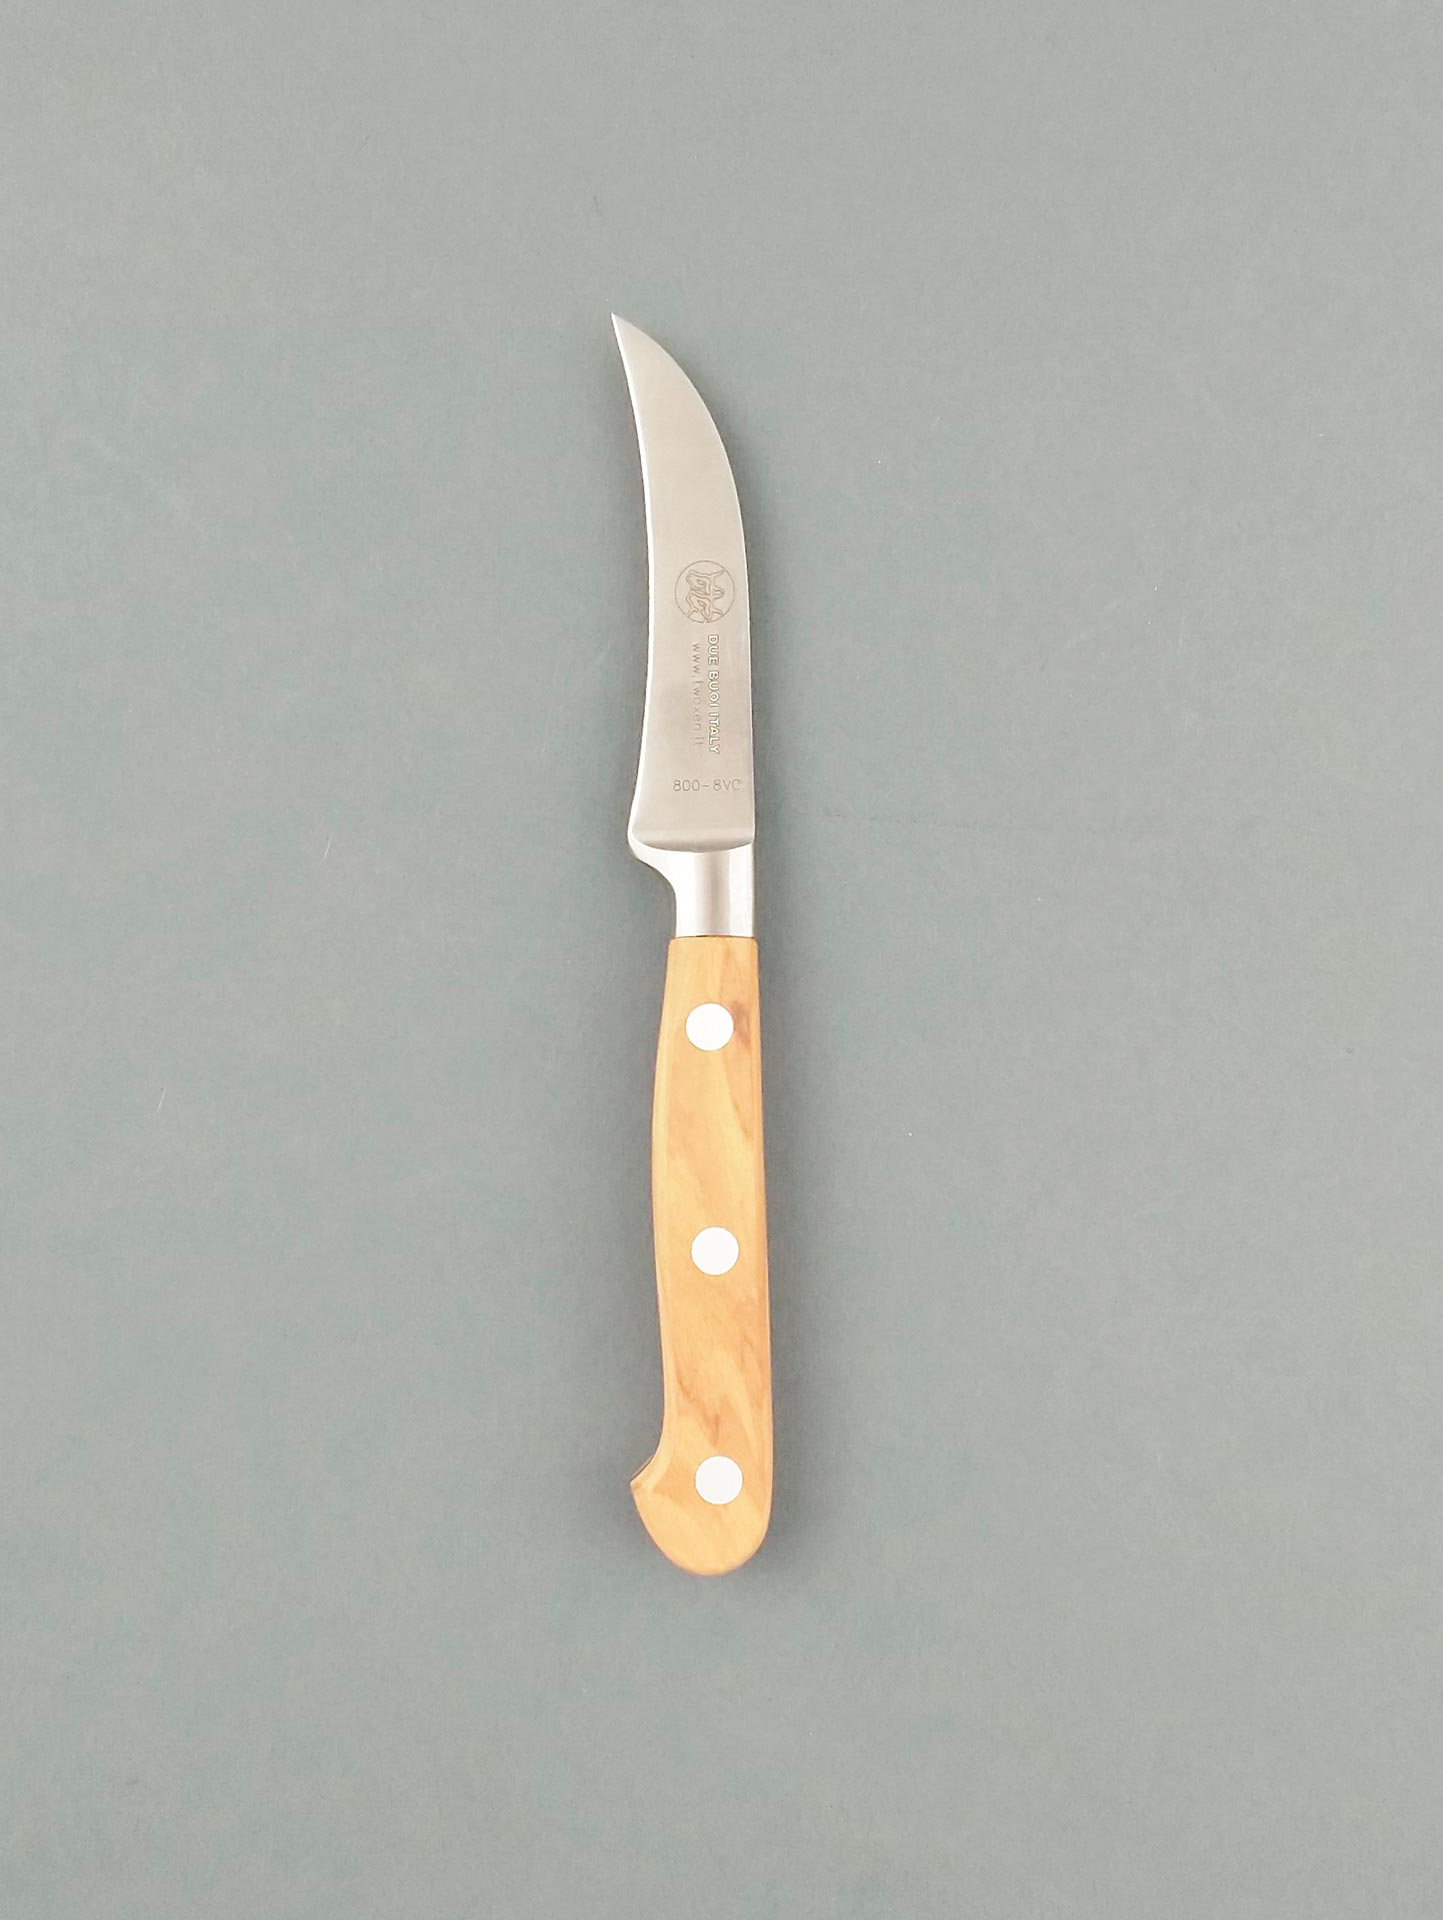 Spelucchino - Curvo - 8 cm - manico olivo - DUE BUOI Knives